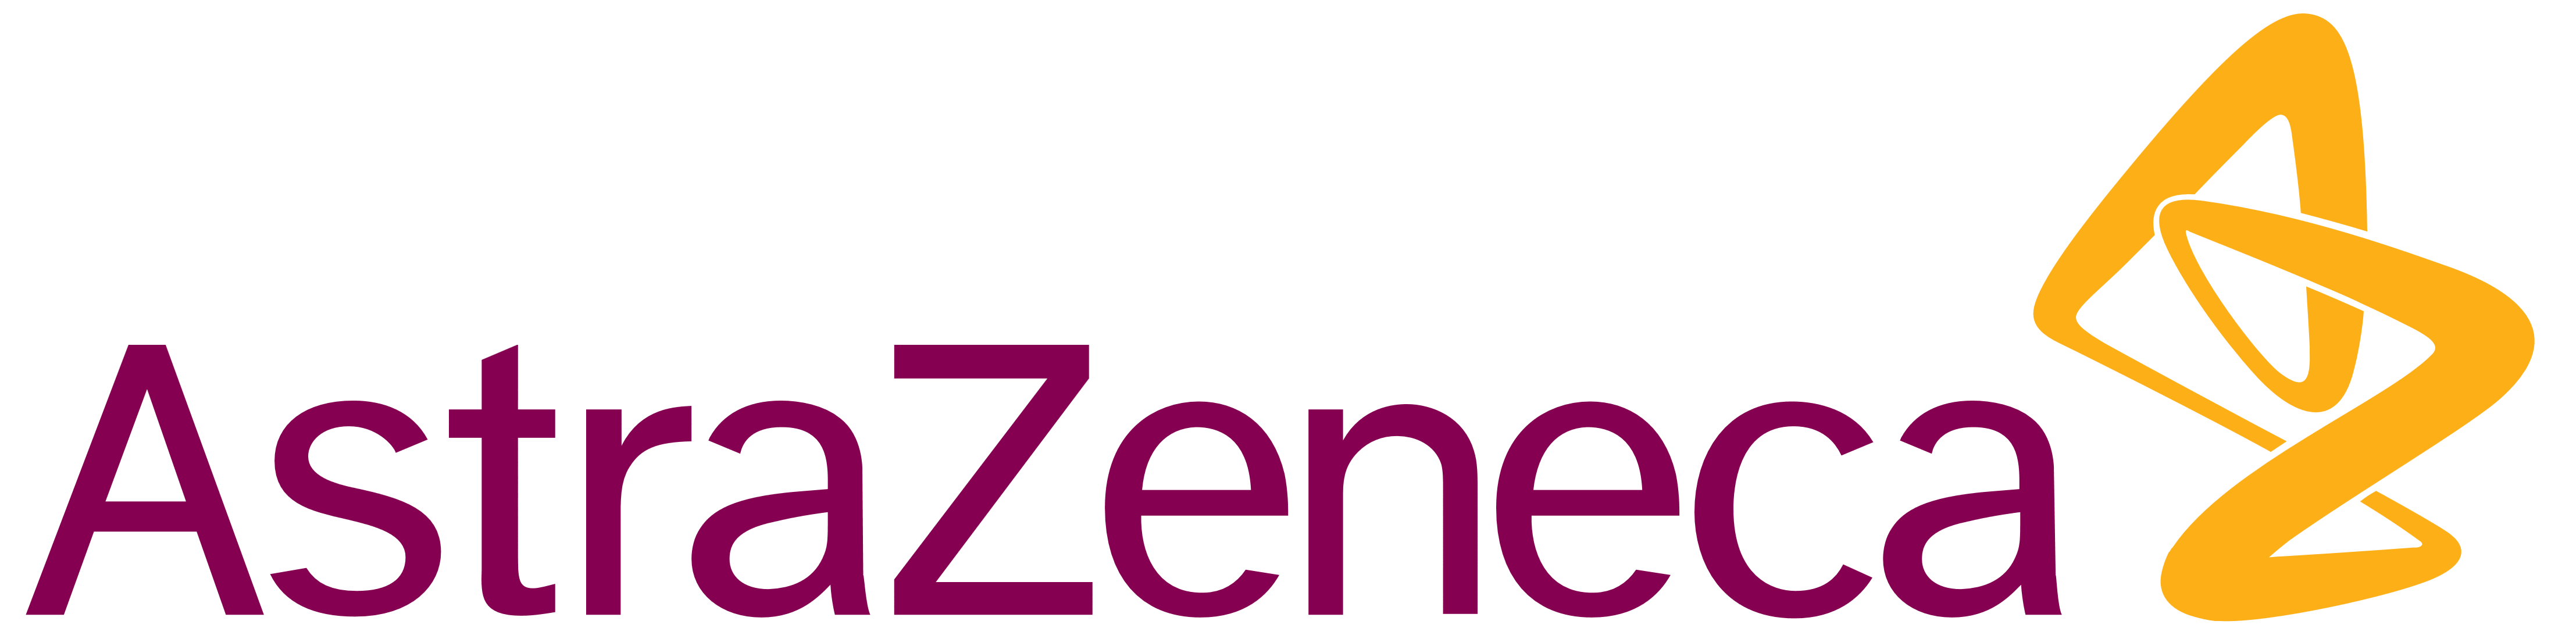  AstraZeneca Logos Download